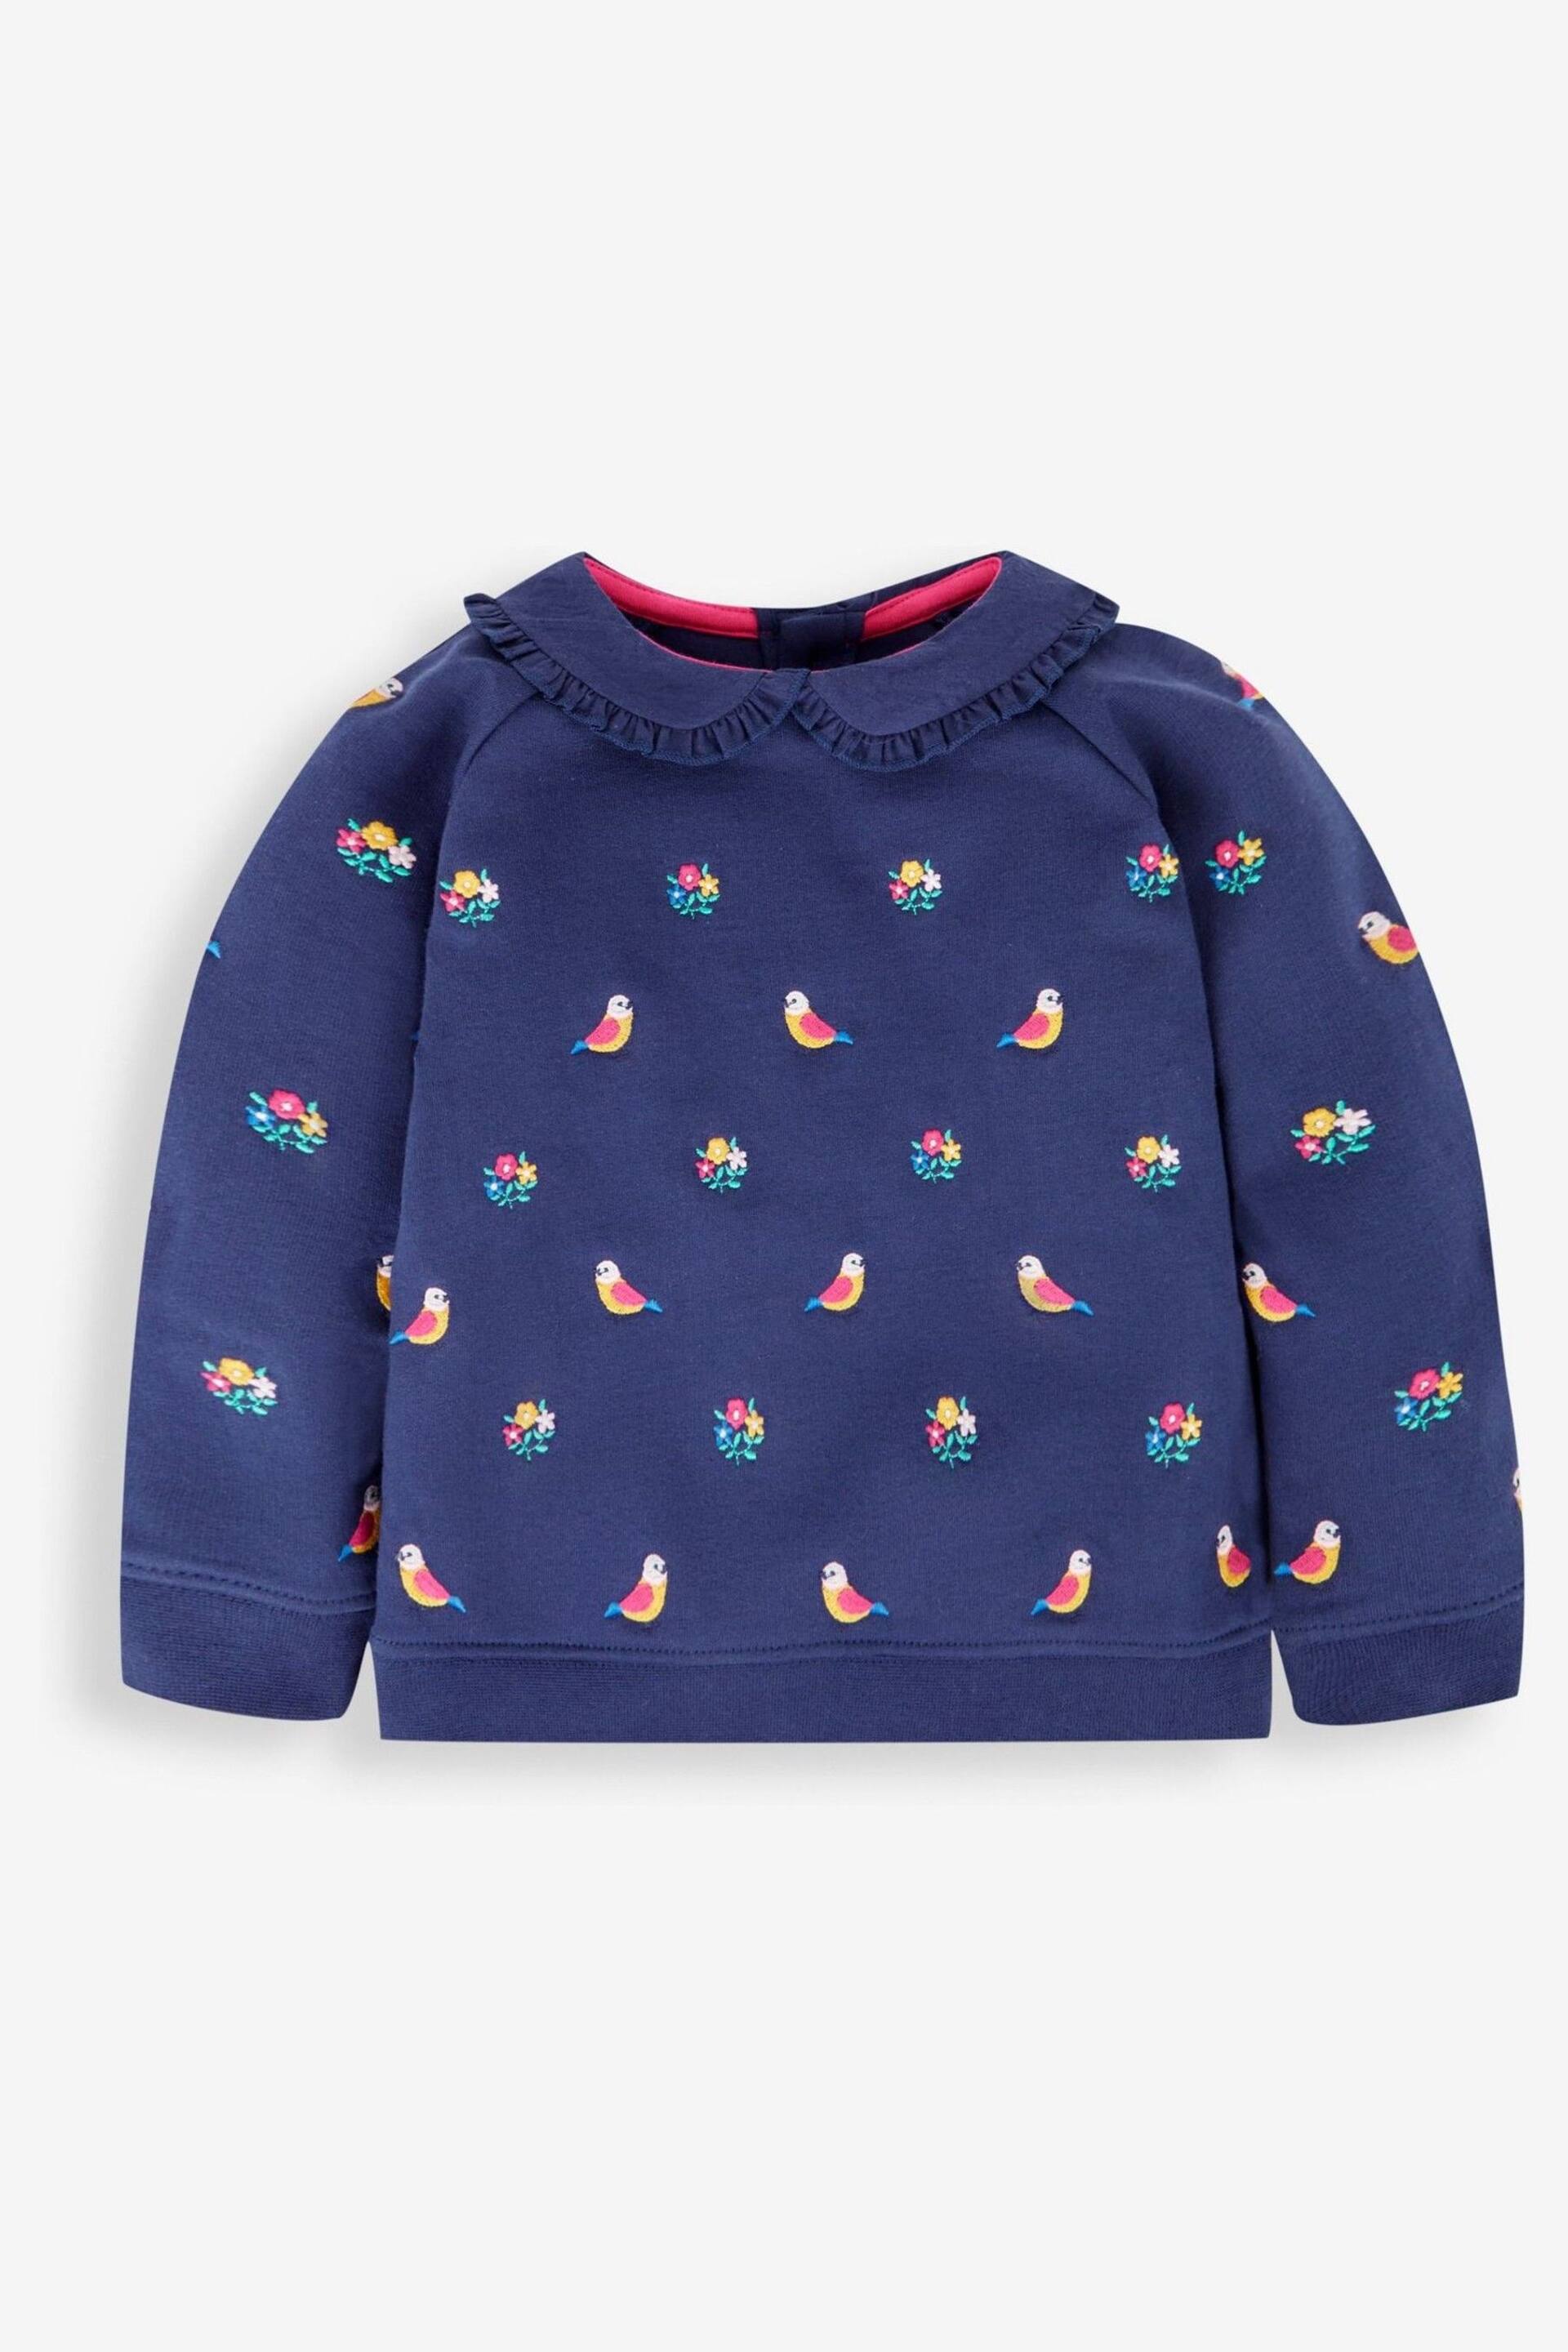 JoJo Maman Bébé Navy Blue Bird Embroidered Sweatshirt With Collar - Image 1 of 2